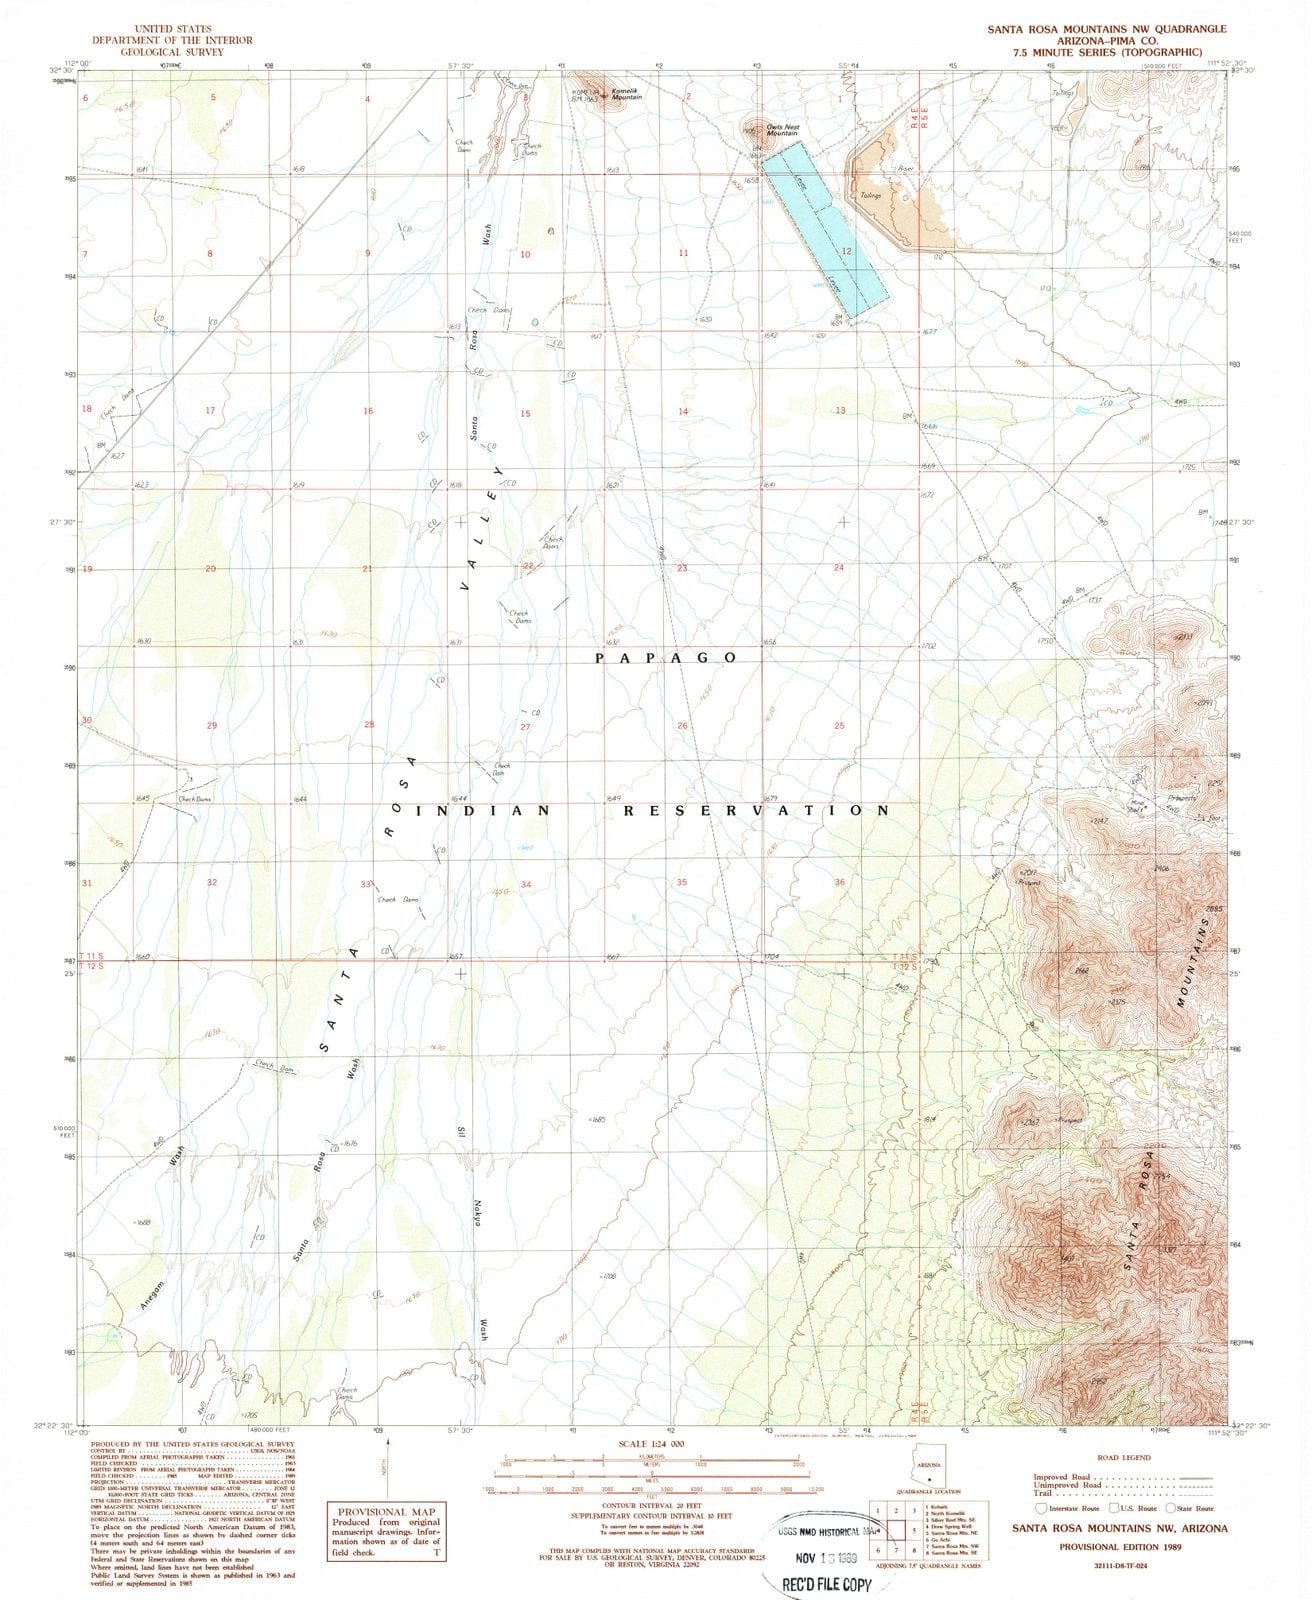 1989 Santa Rosa Mountains, AZ - Arizona - USGS Topographic Map v2